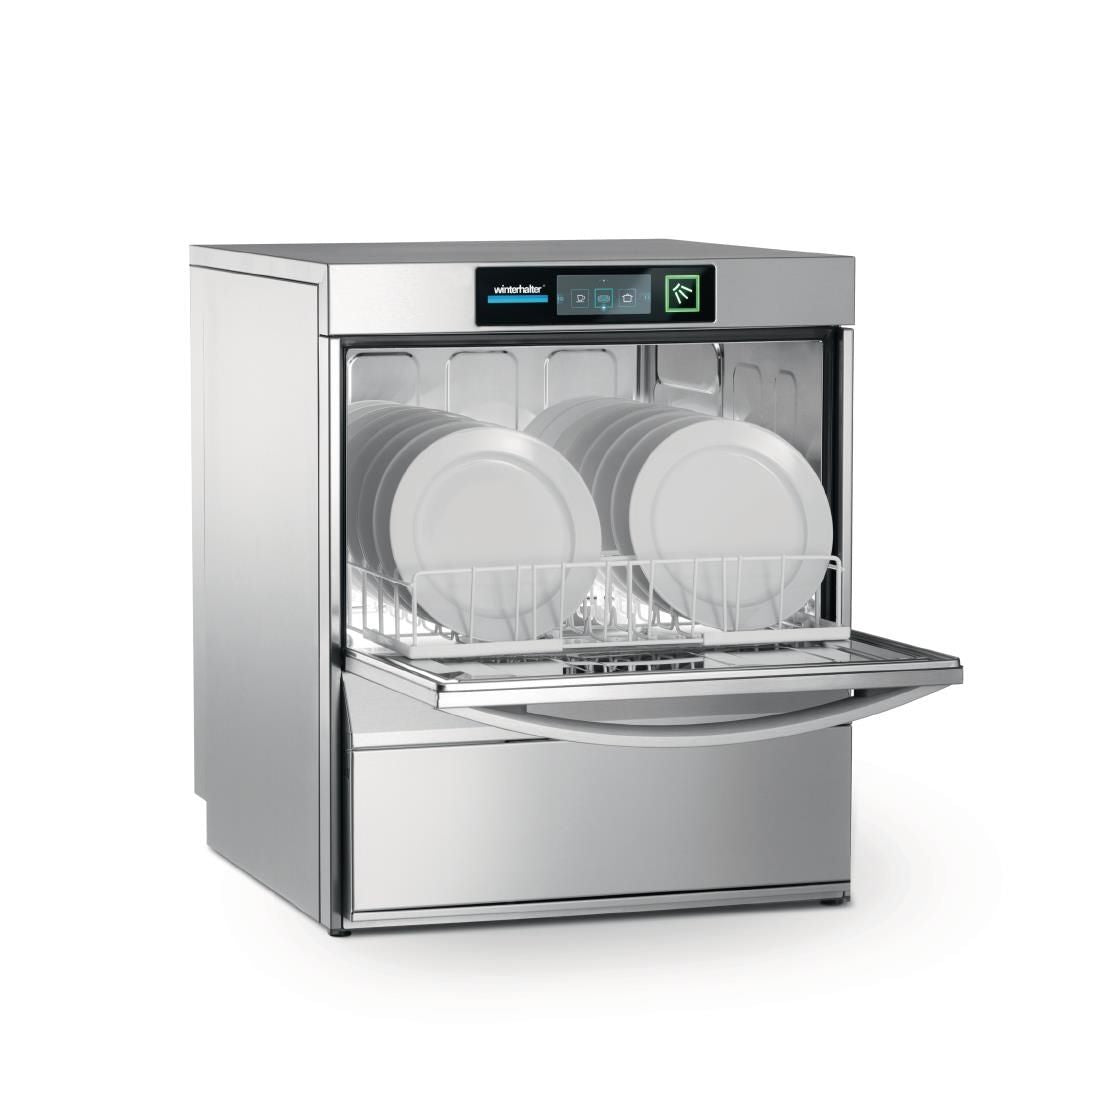 DE642 Winterhalter Undercounter Dishwasher UC-M JD Catering Equipment Solutions Ltd